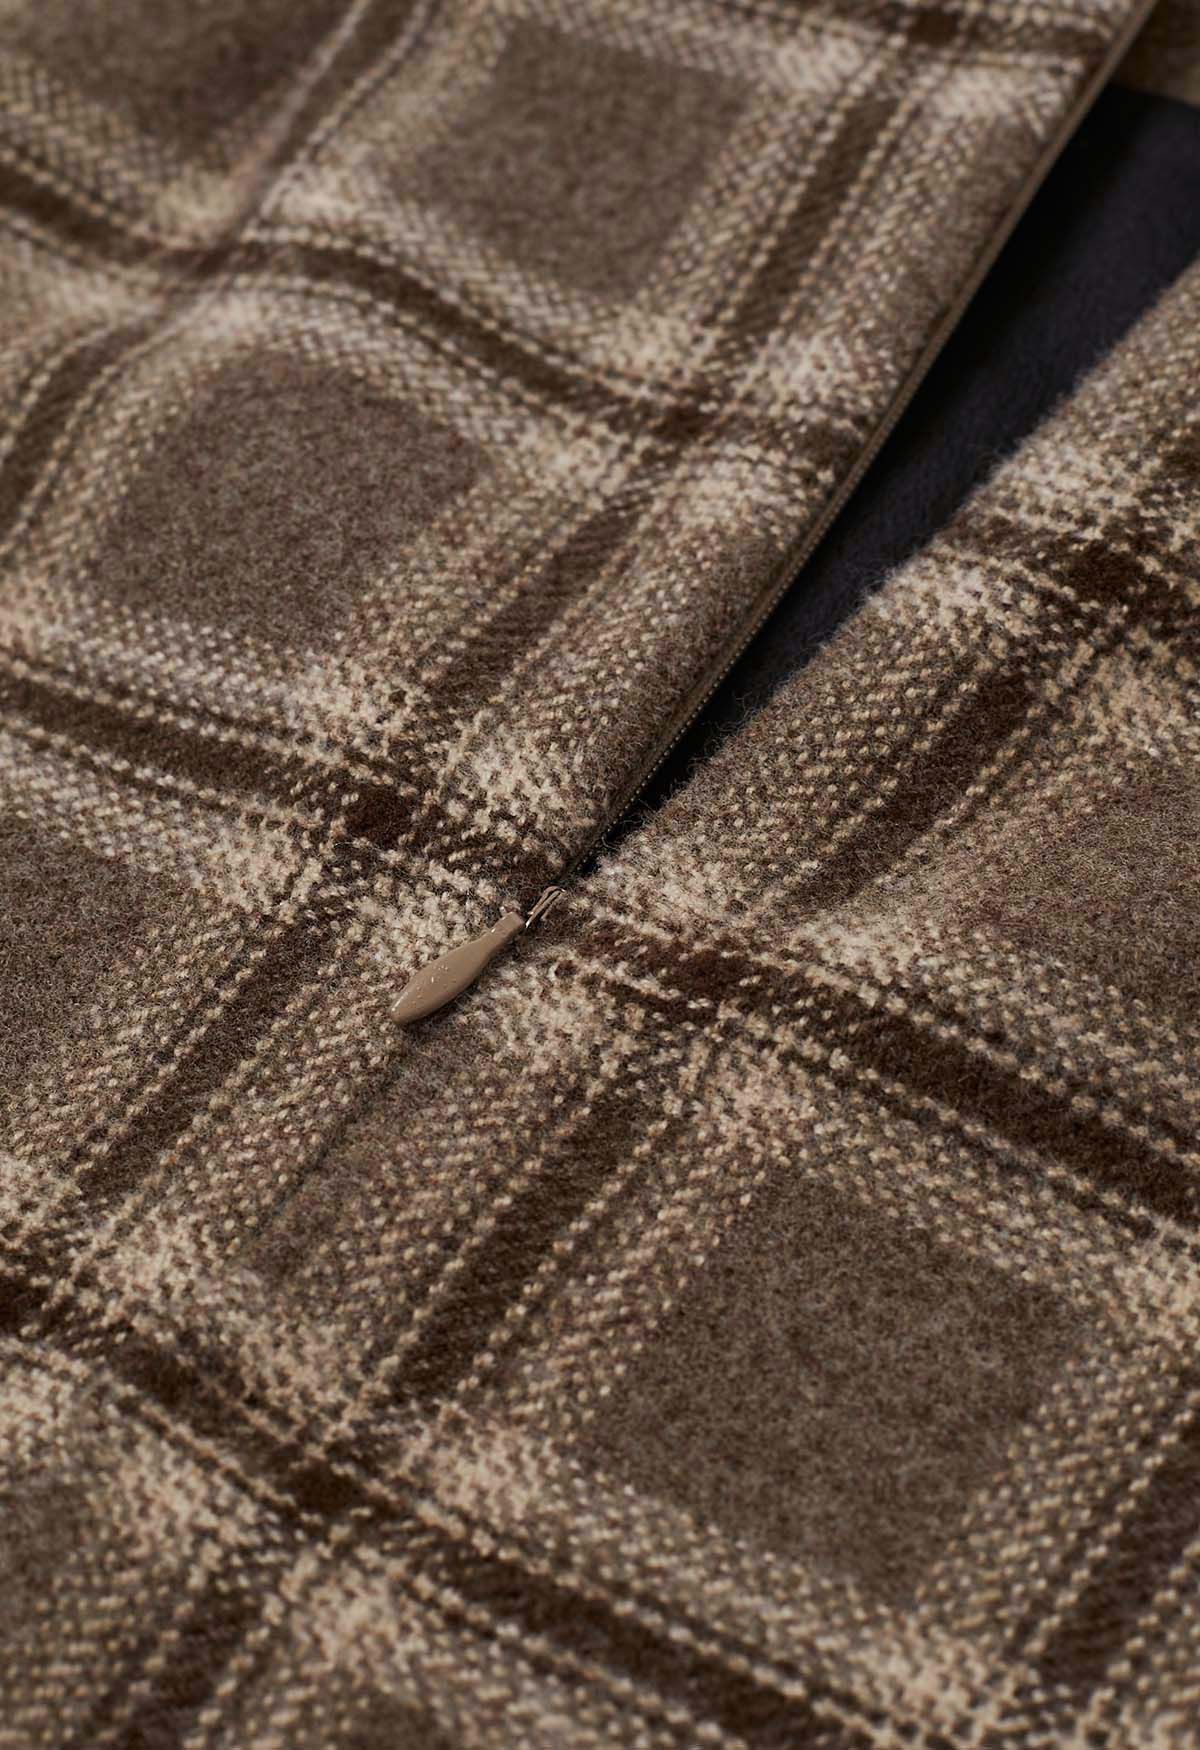 Check Pattern Mini Bud Skirt in Brown